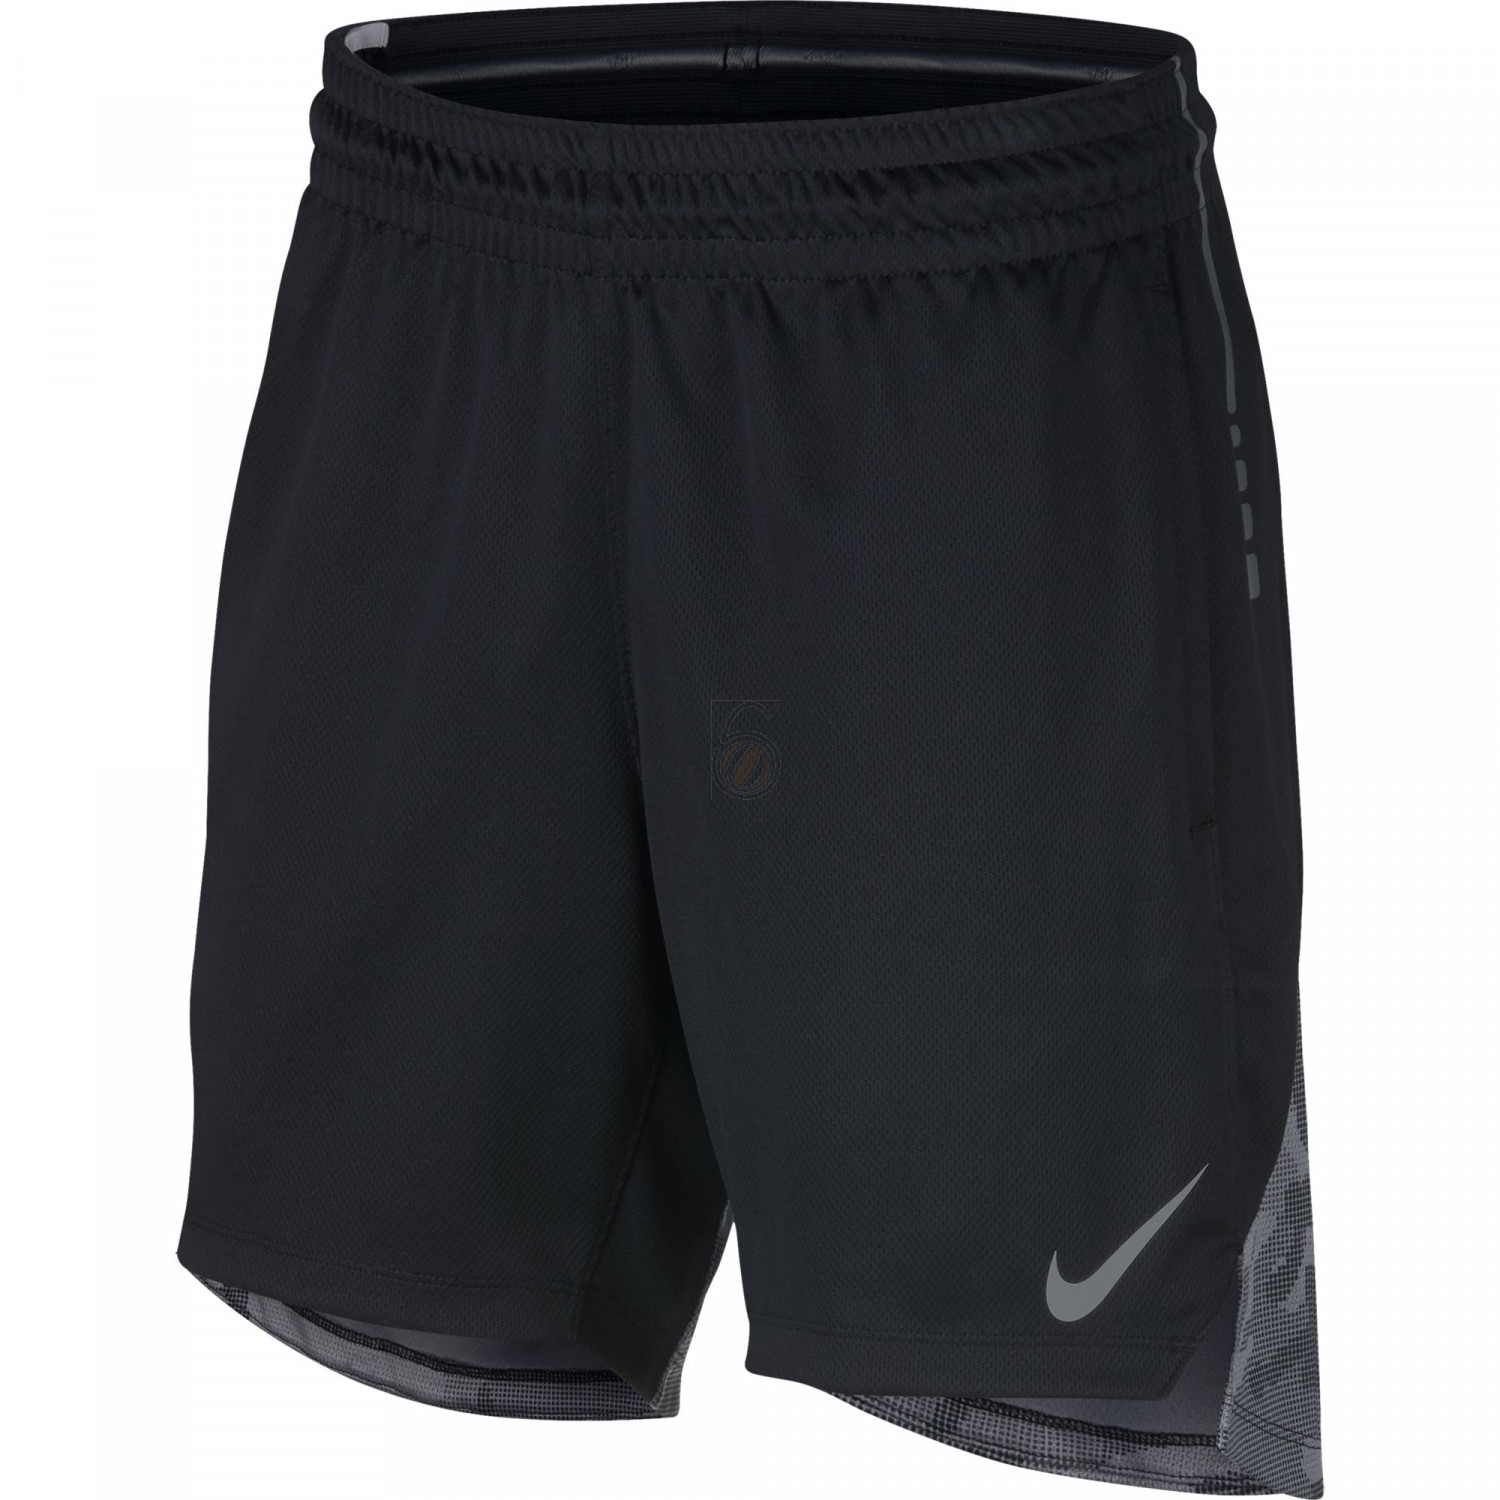 Баскетбольные шорты Nike Elite Knit Basketball Shorts - картинка